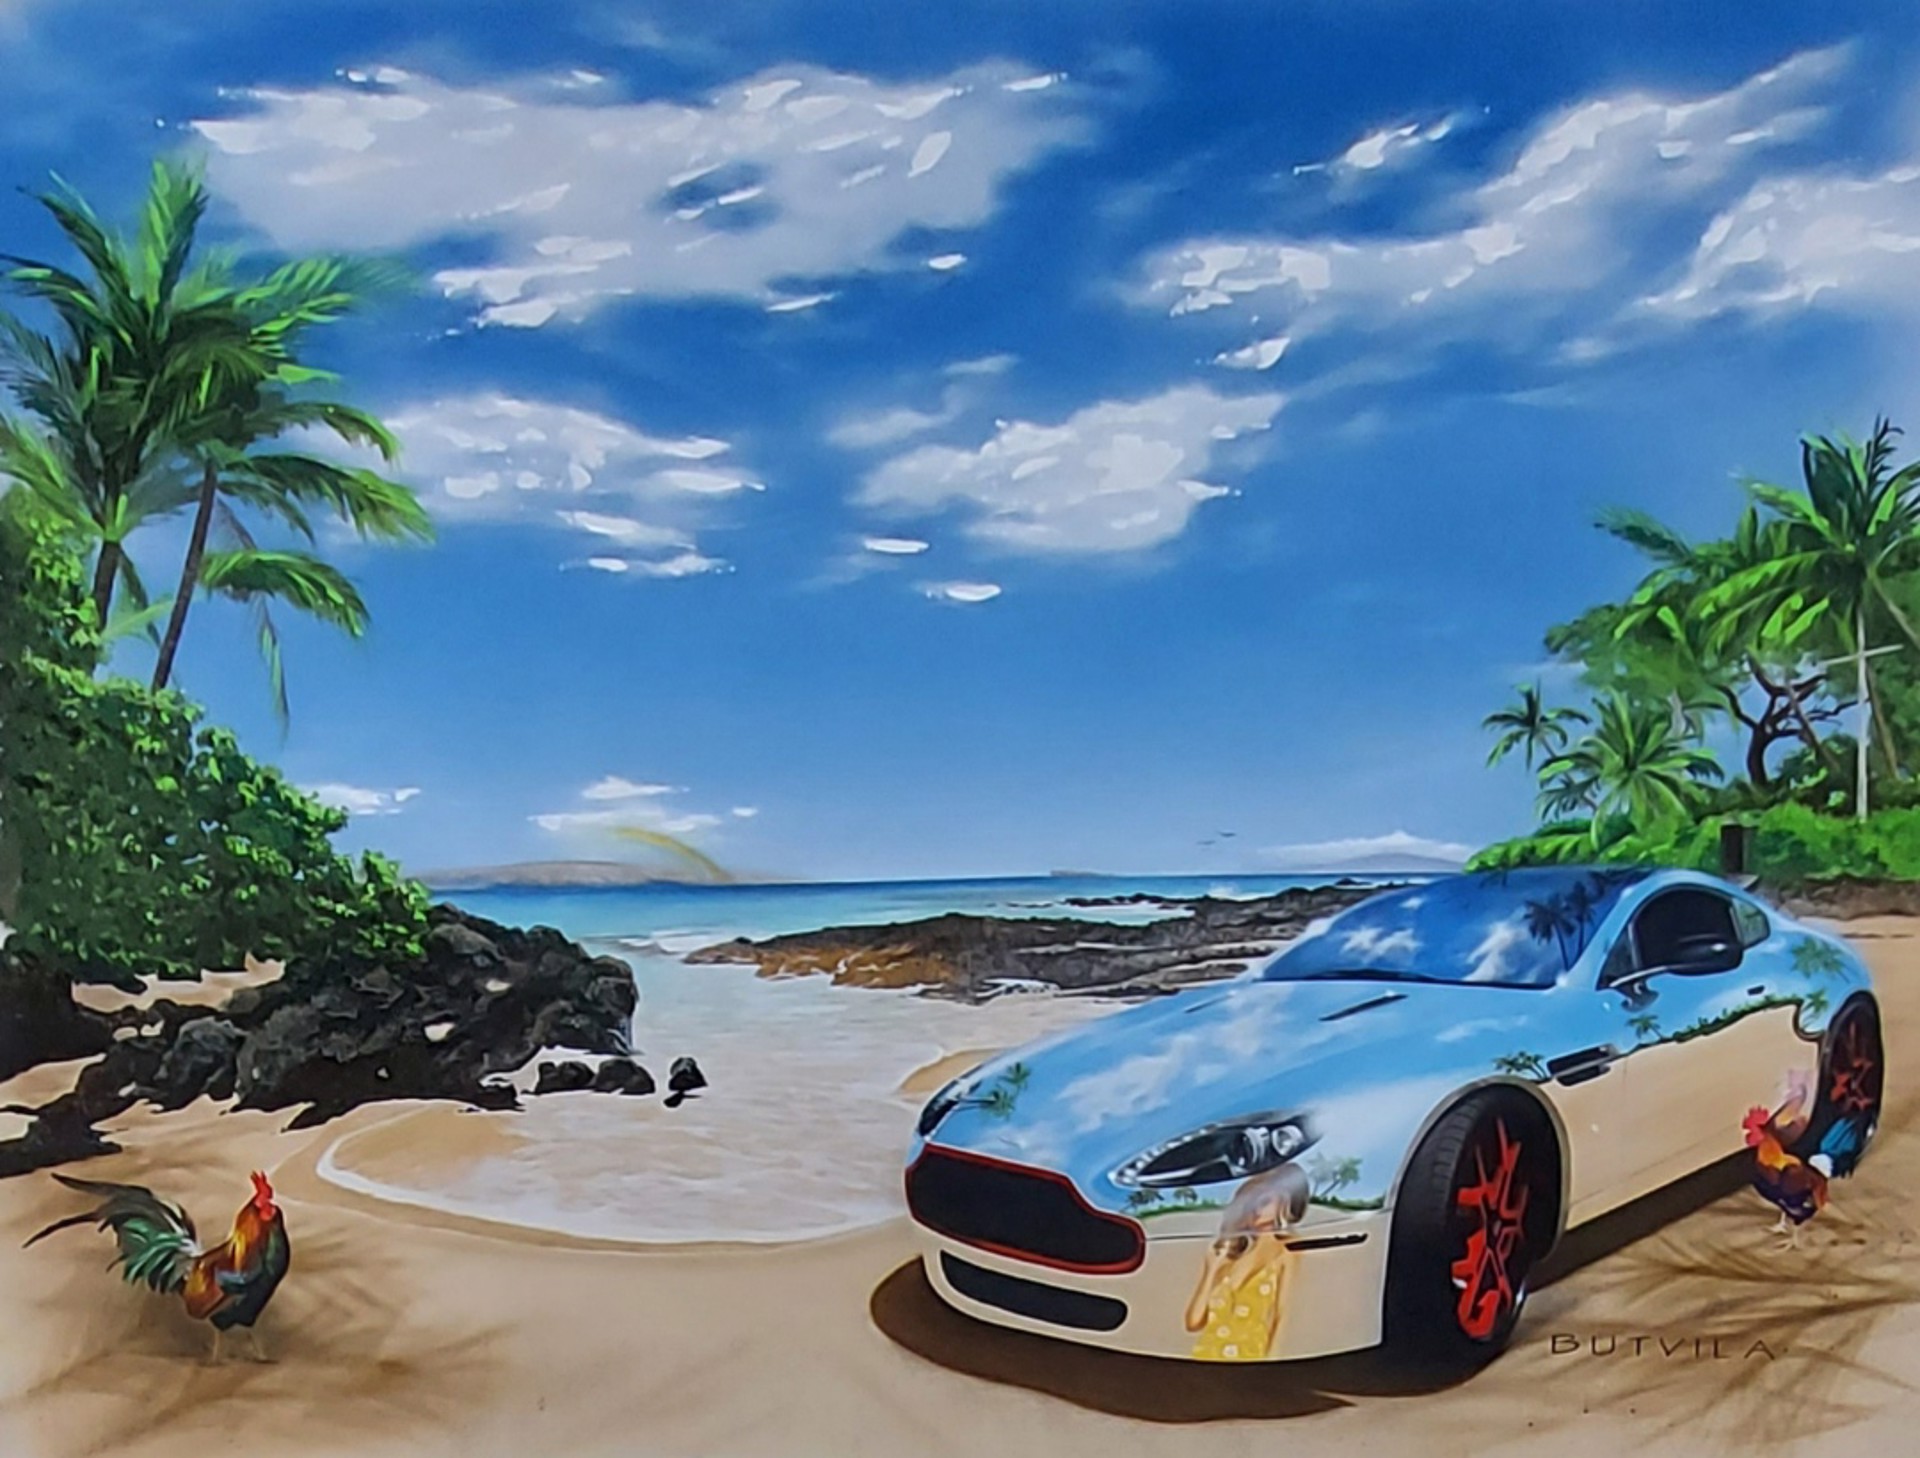 Vantage Point ( Aston Martin Vantage) by Paul Butvila